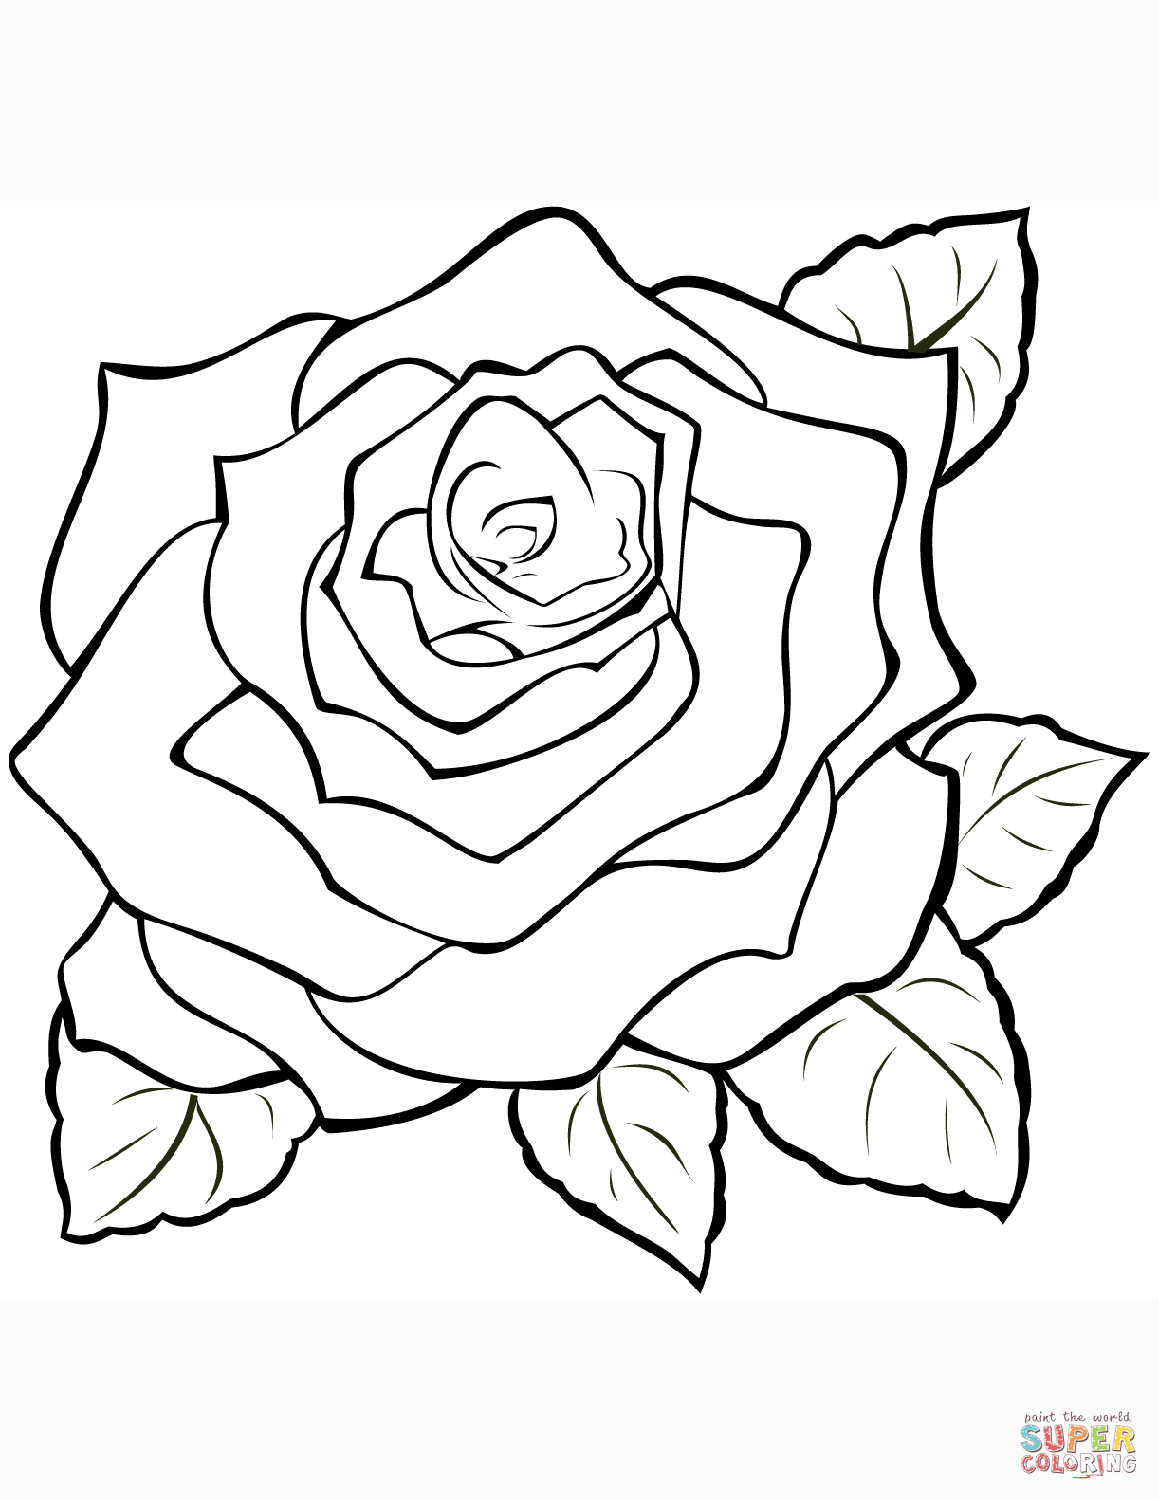 Rose de Roses